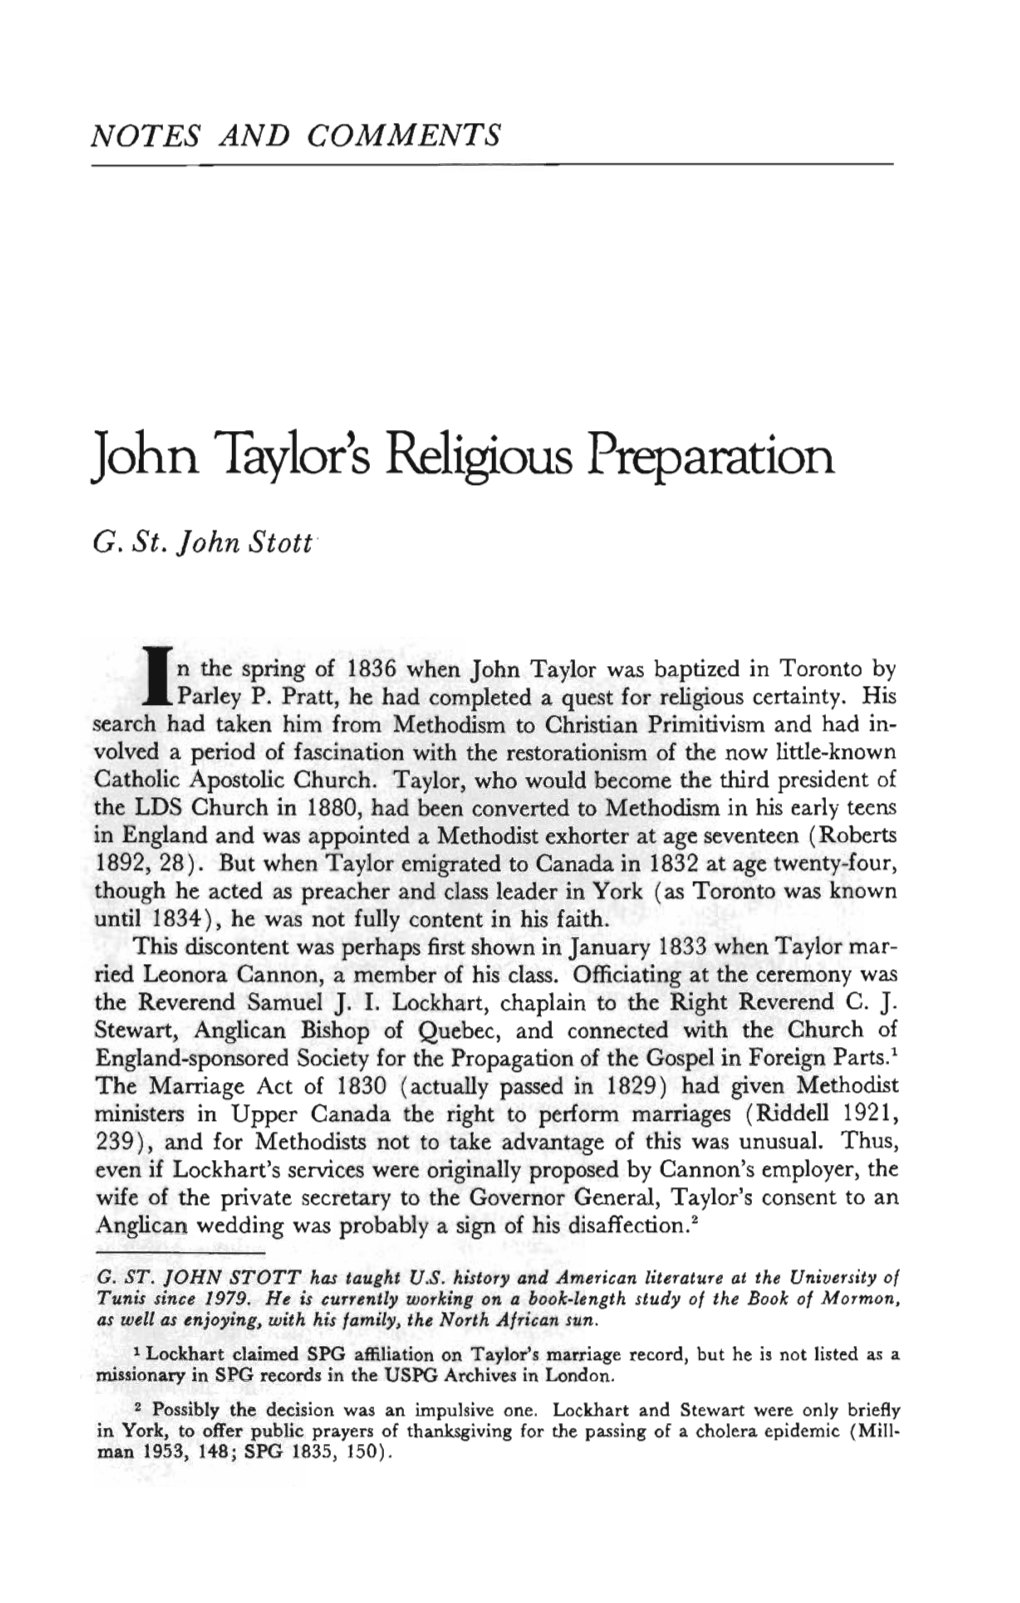 John Taylor's Religious Preparation